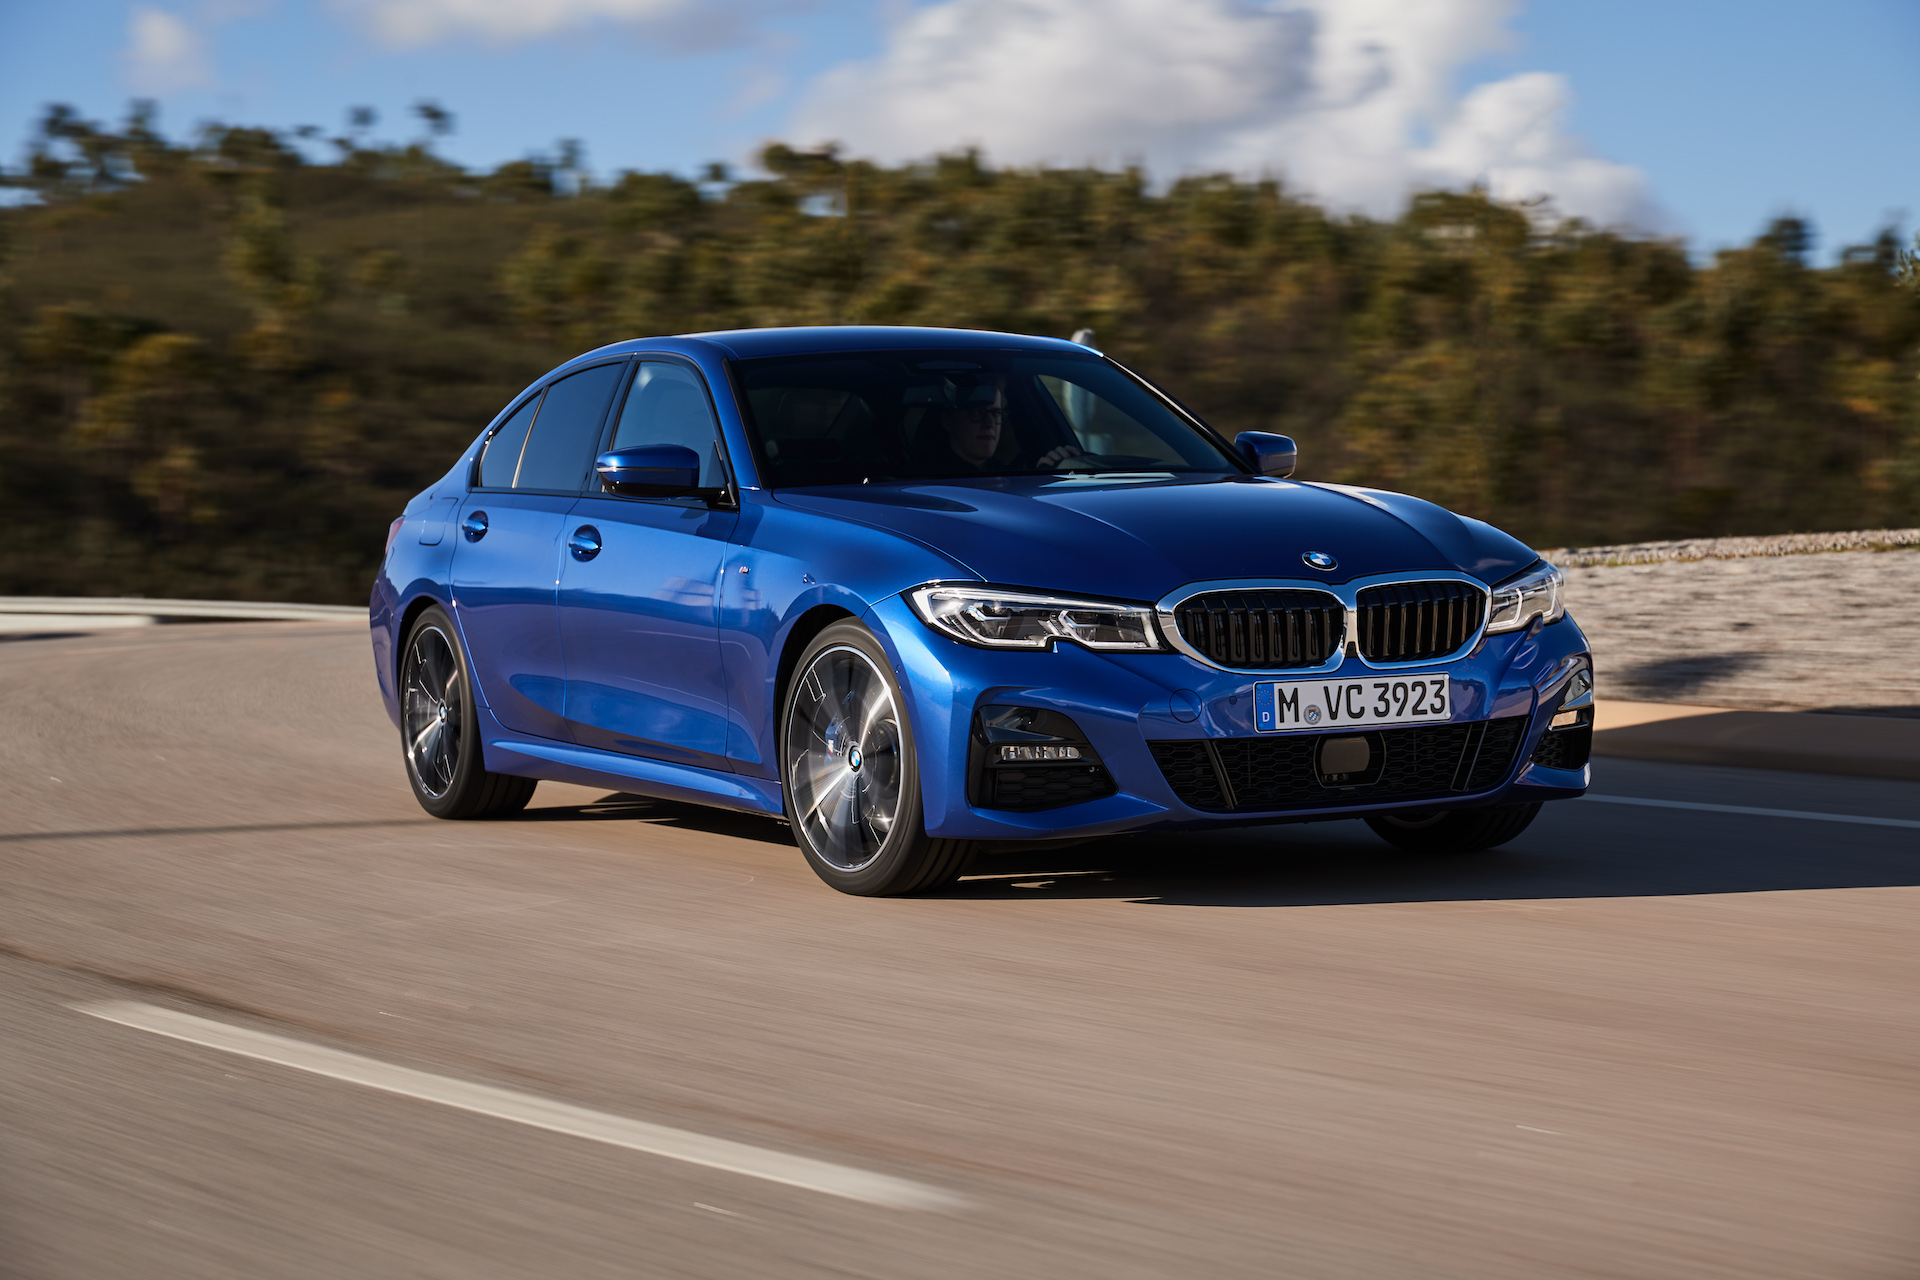 2020 BMW M340i will set buyers back $54,995